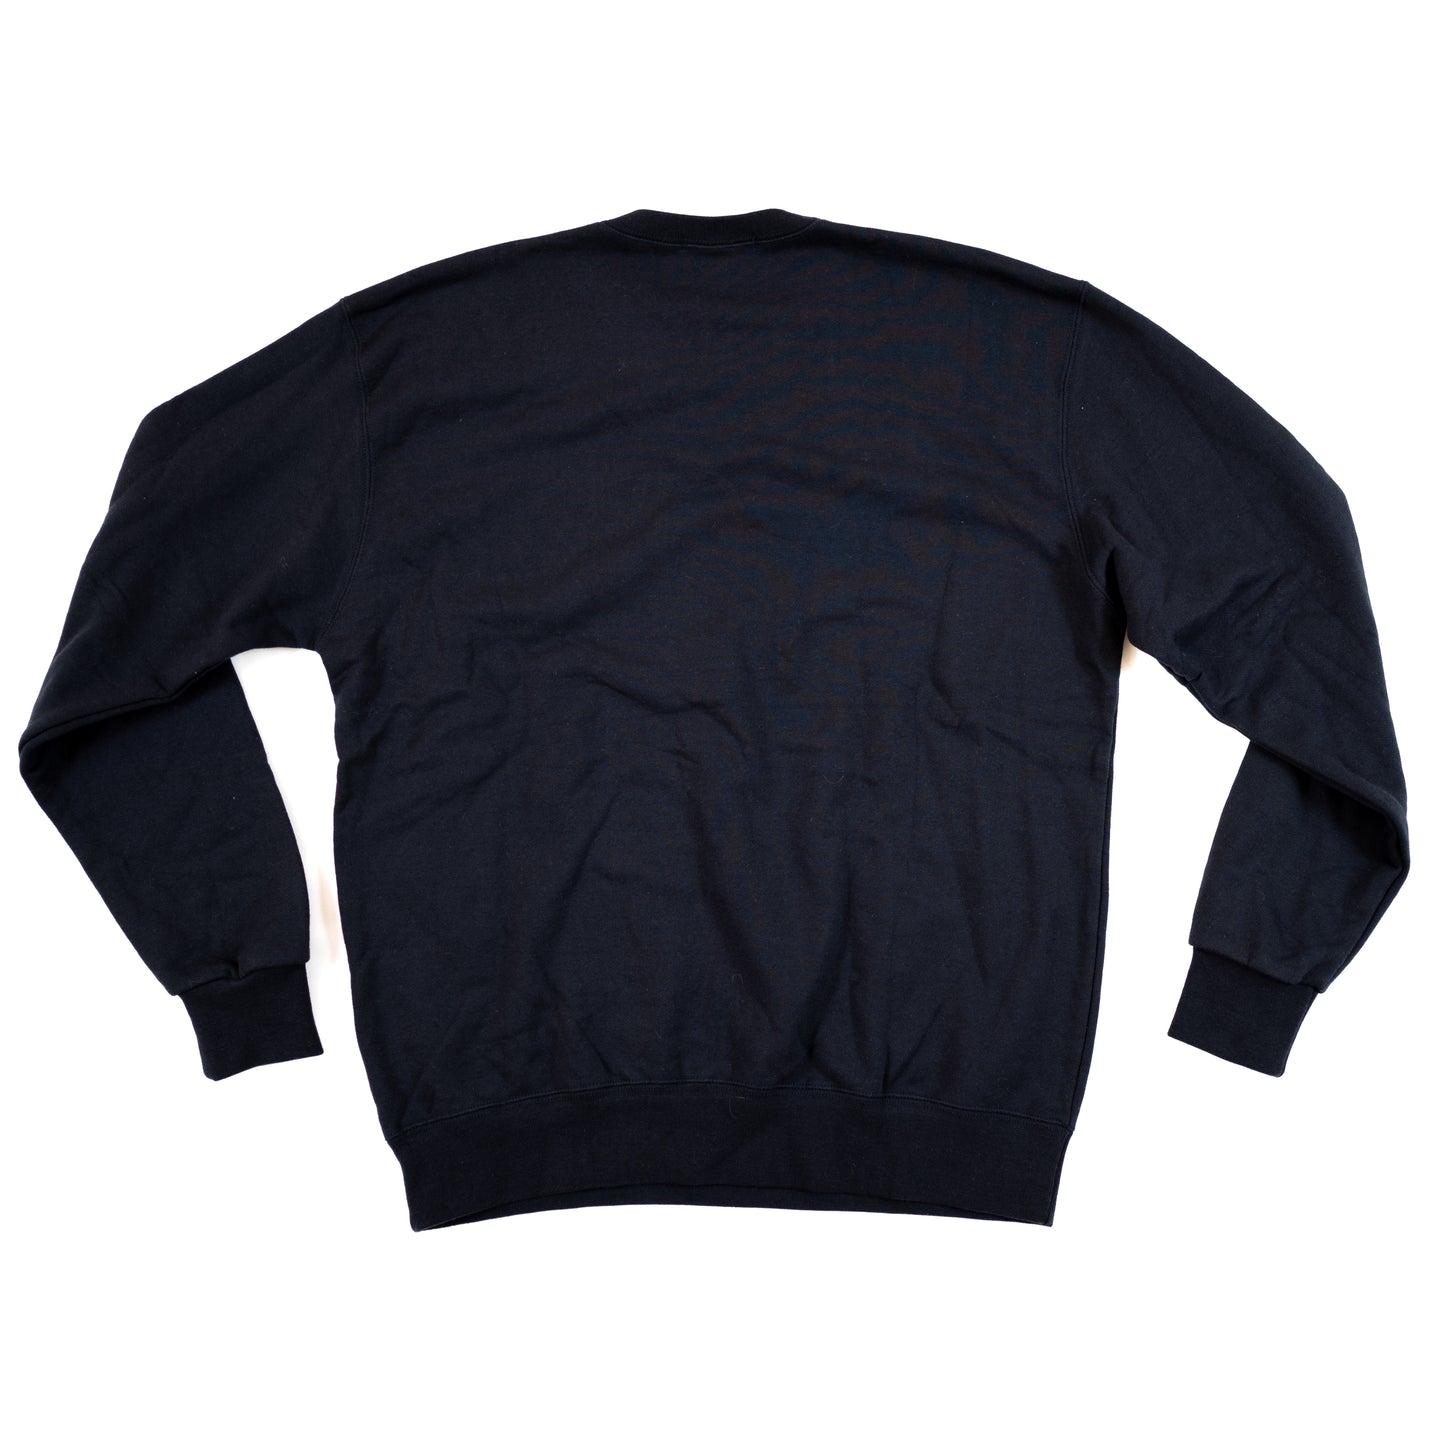 Undercover x Fragment Design 'Chaos' Sweatshirt